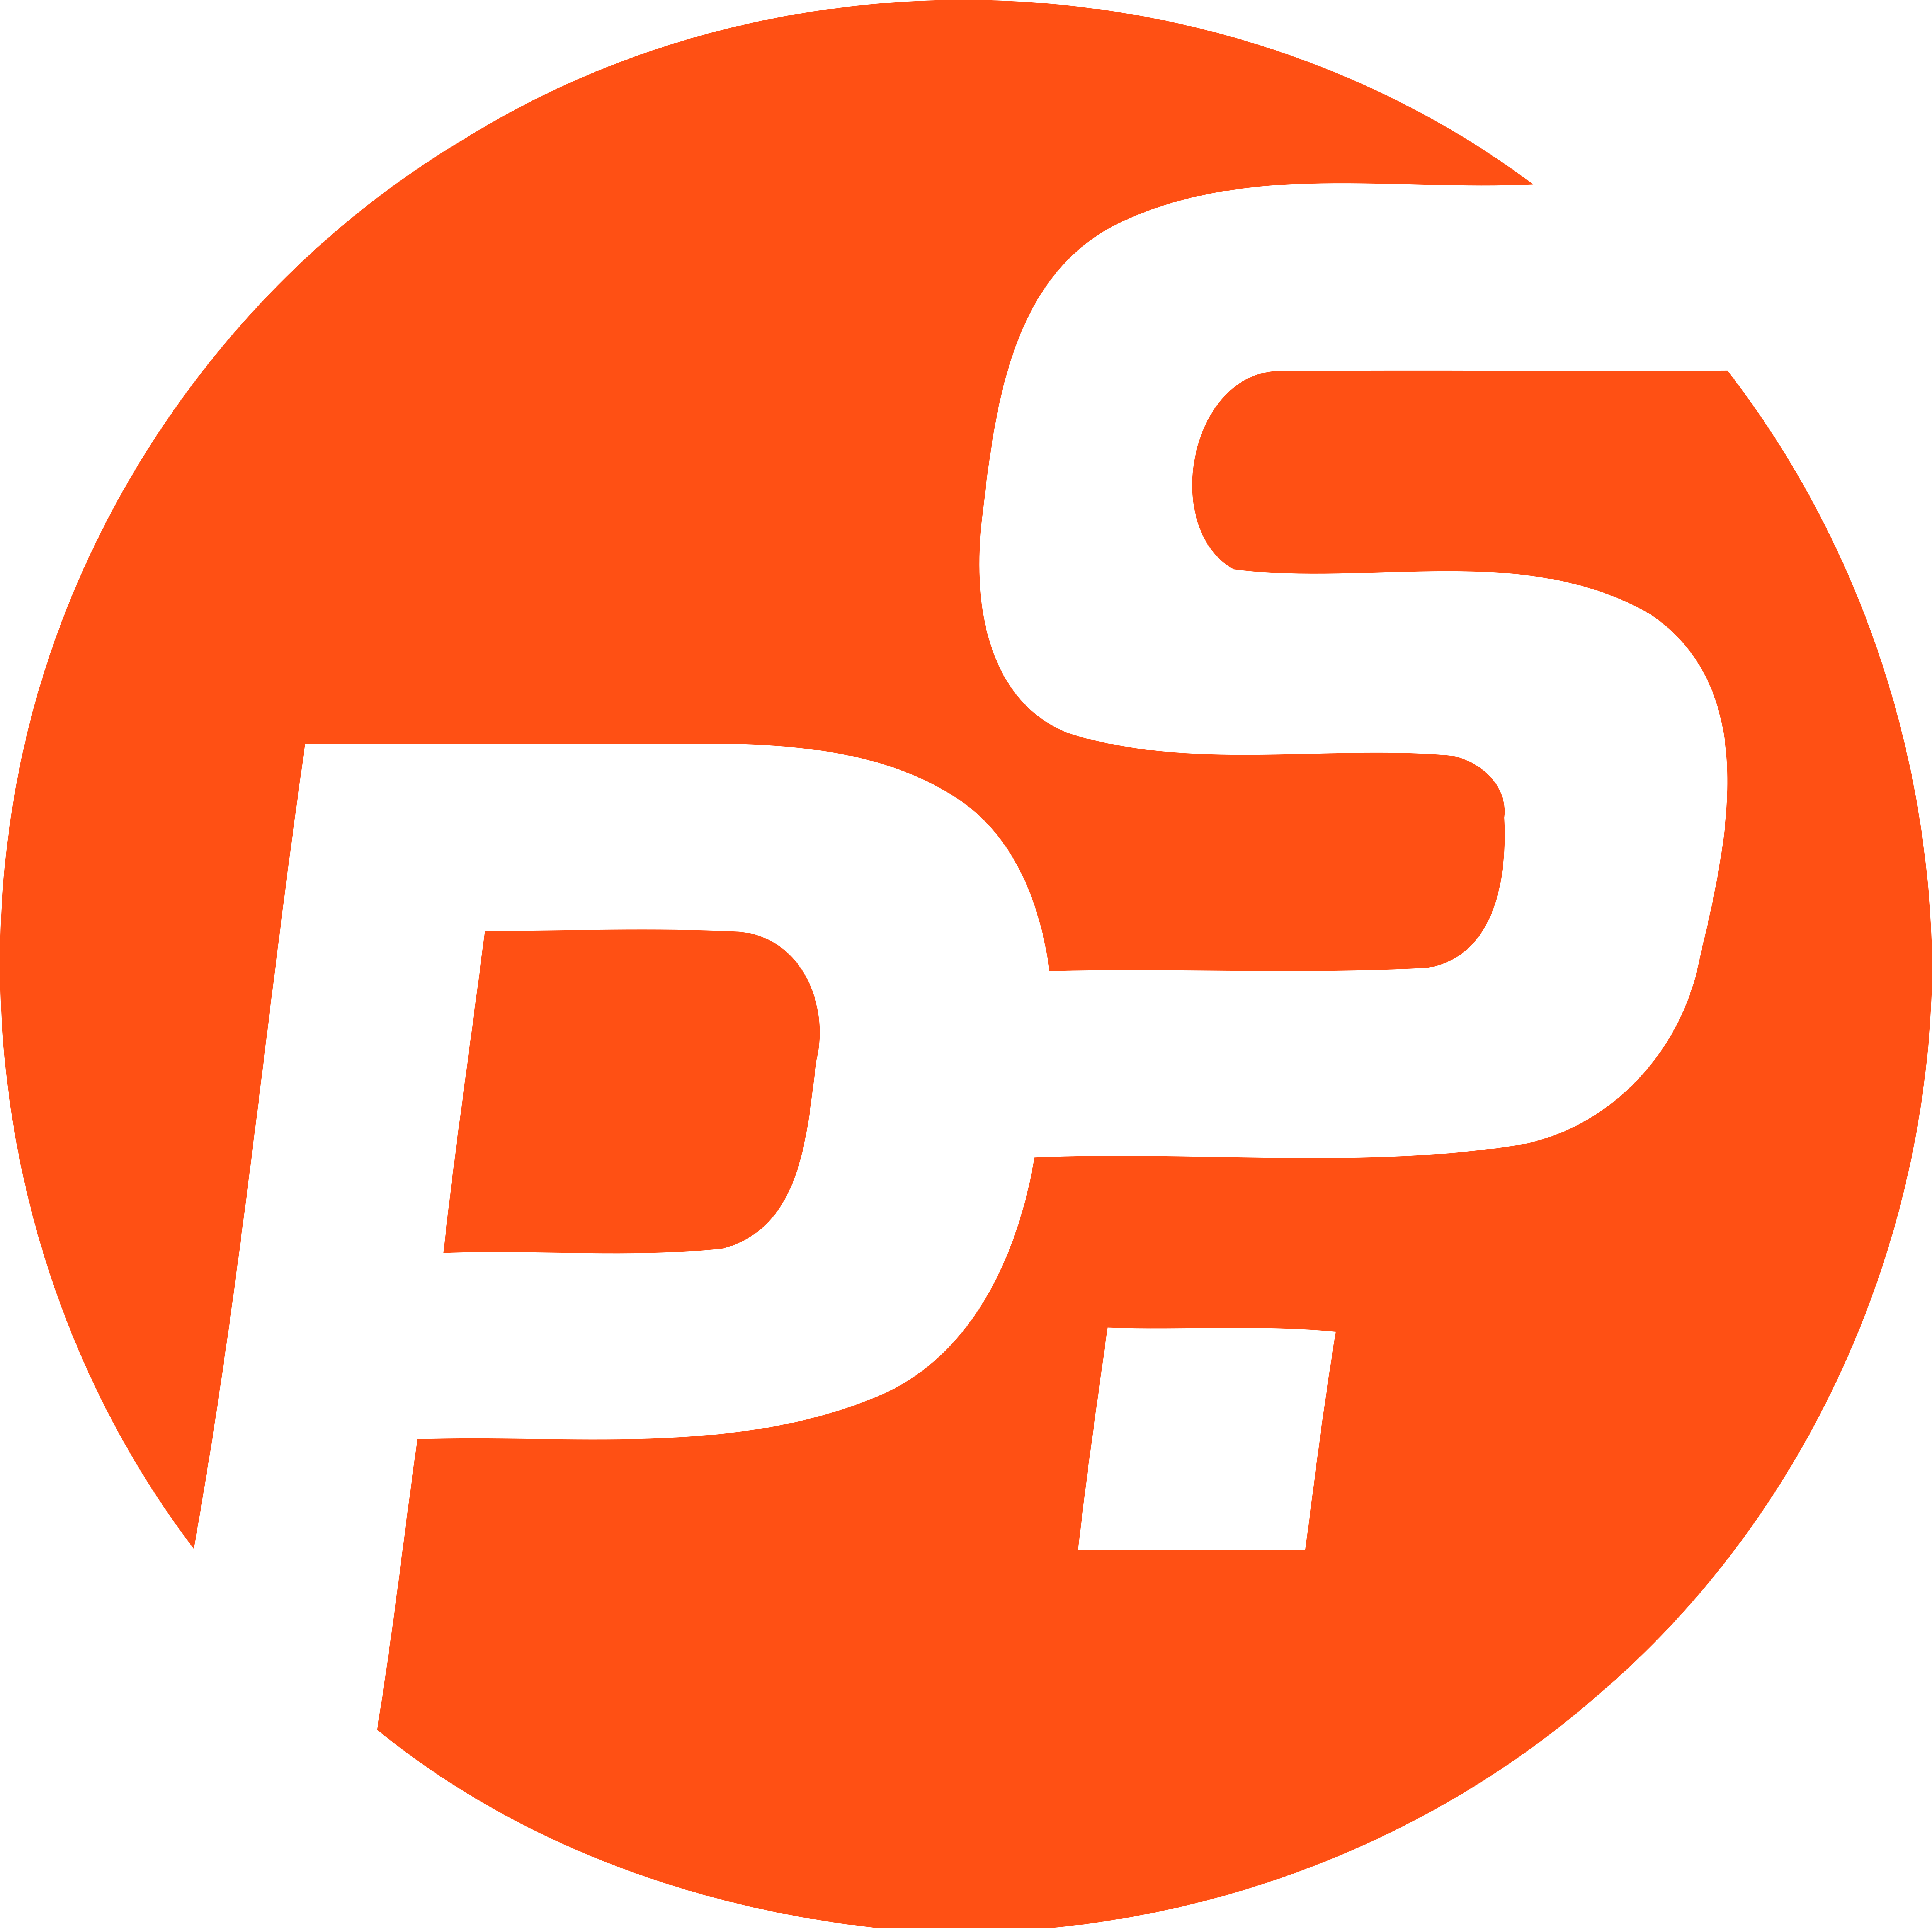 Эмблема ПС. S&P логотип. Плейстейшен лого. PS лого вектор. Логотип пс